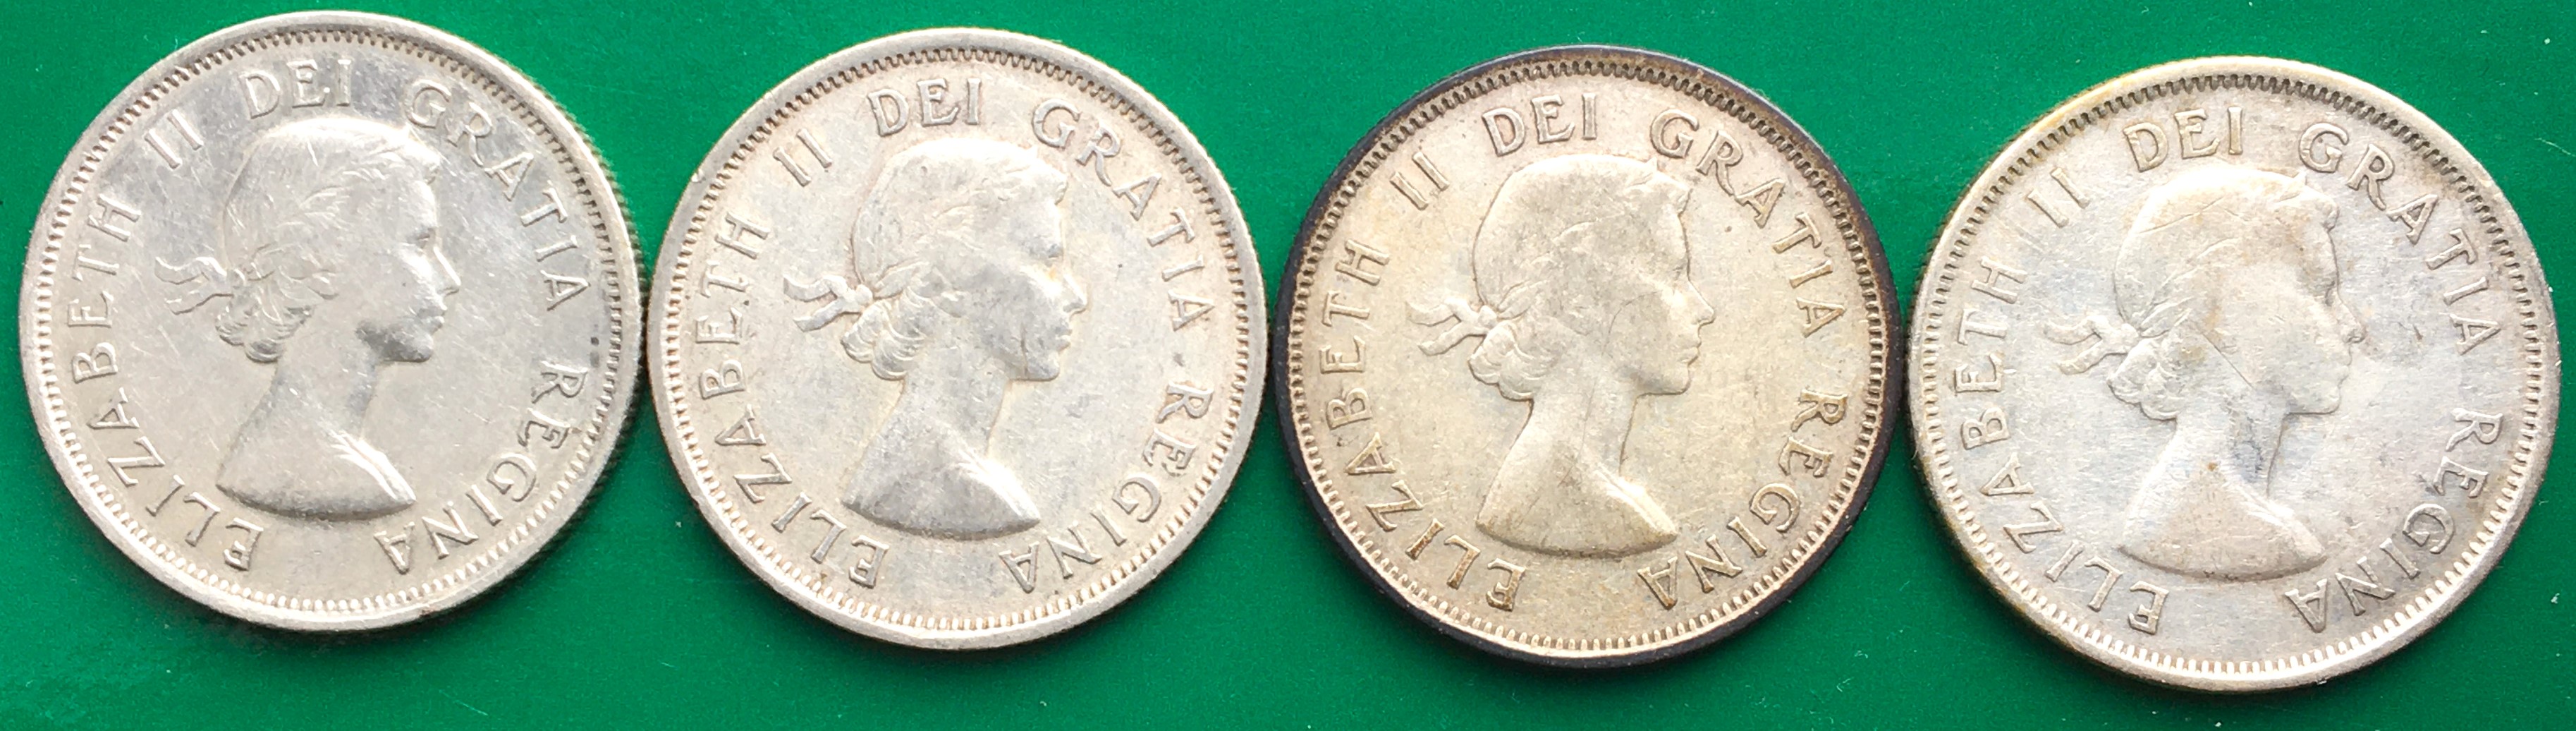 25 cents 1955 avers 4.JPG